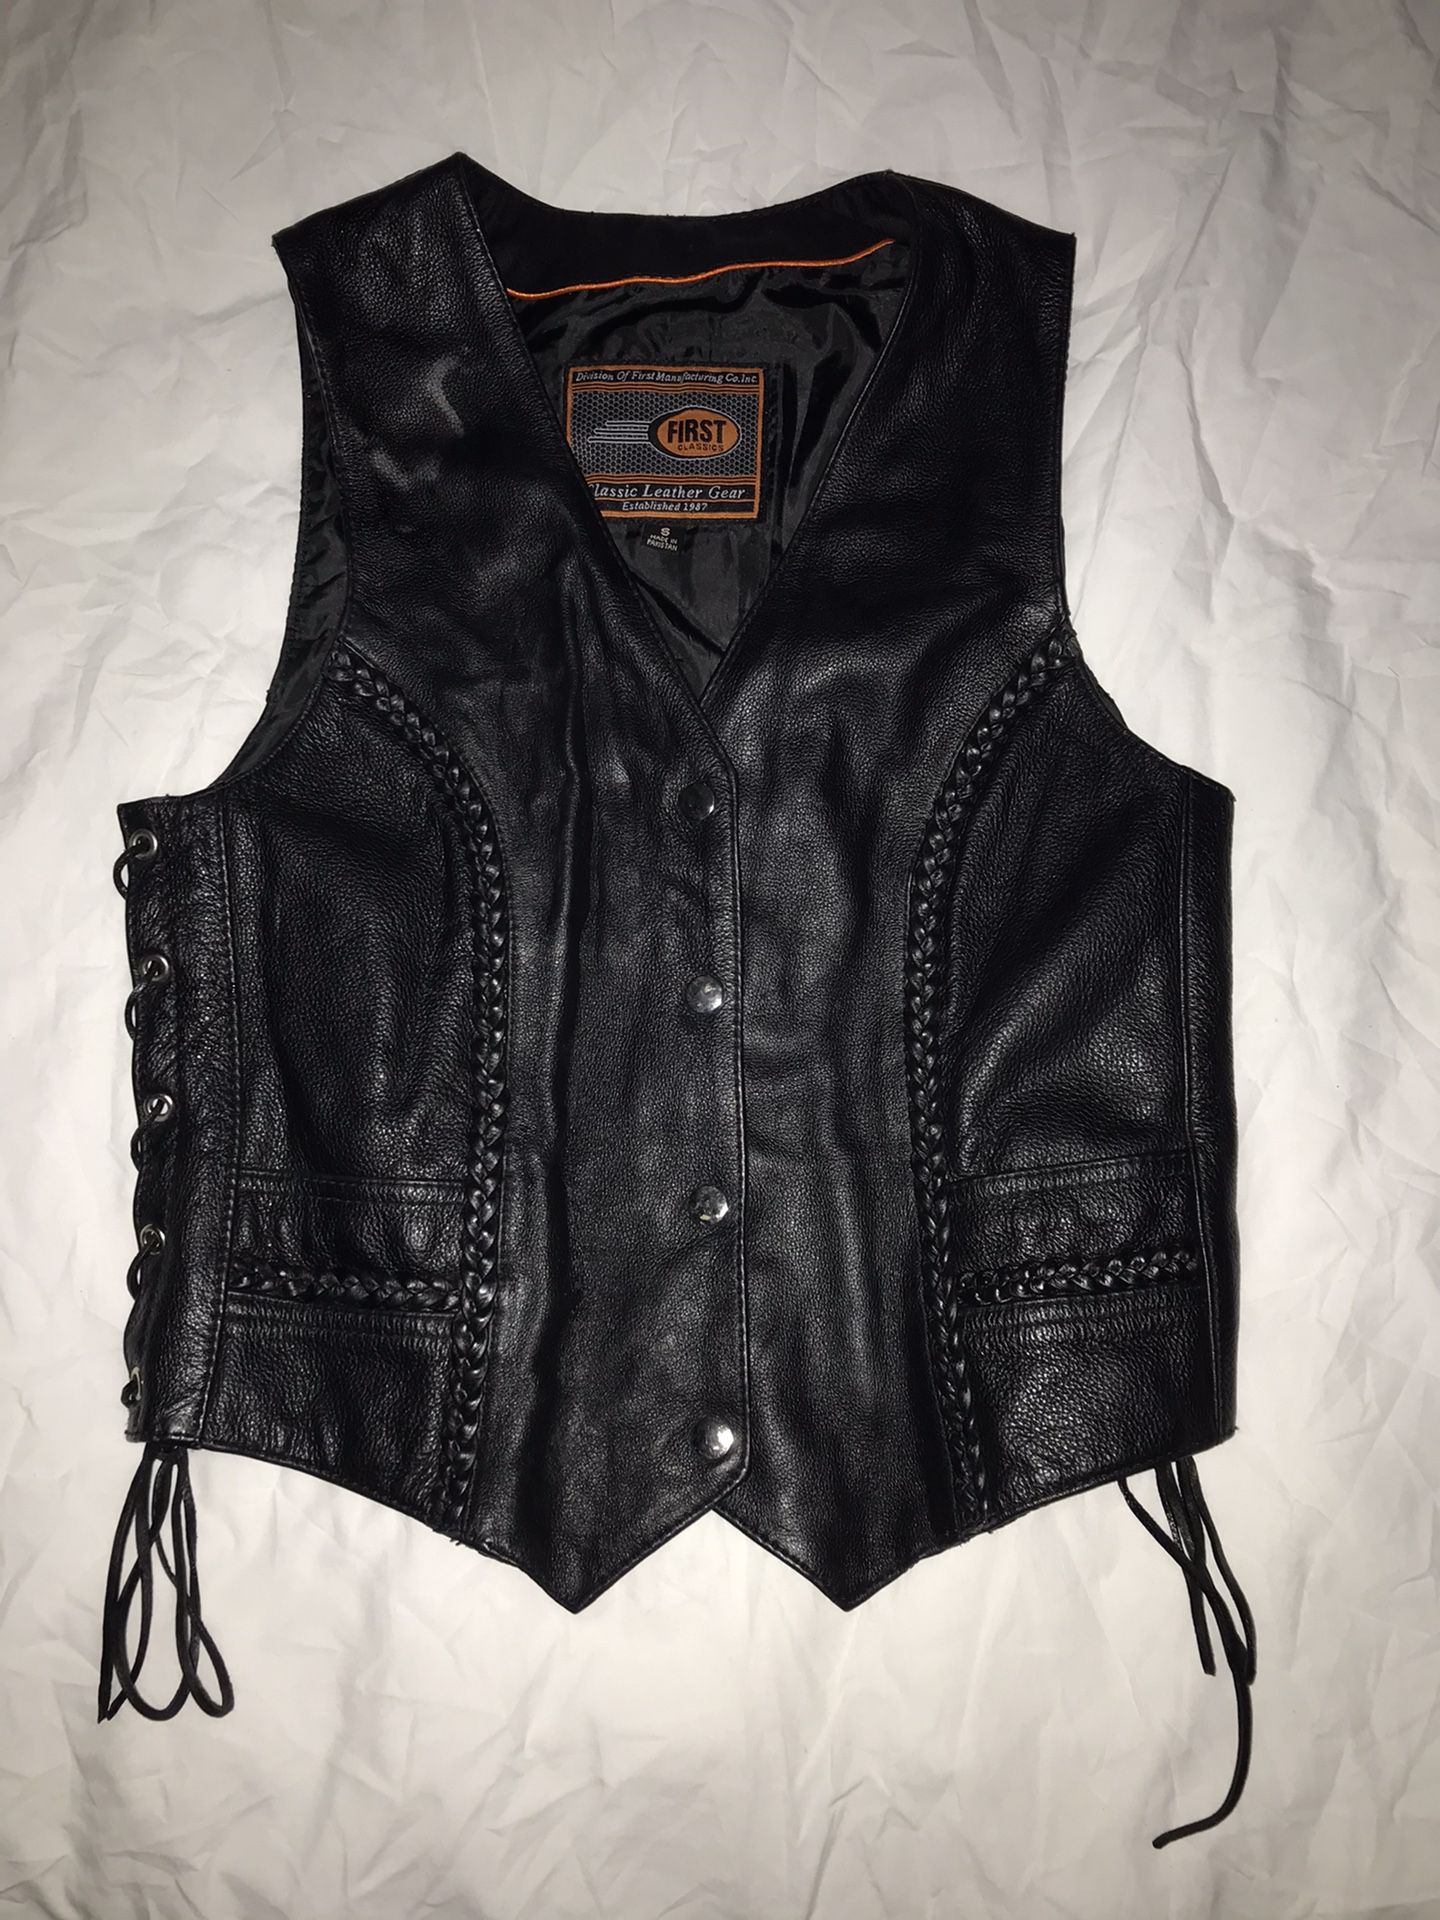 Women’s size small Harley Davidson leather vest